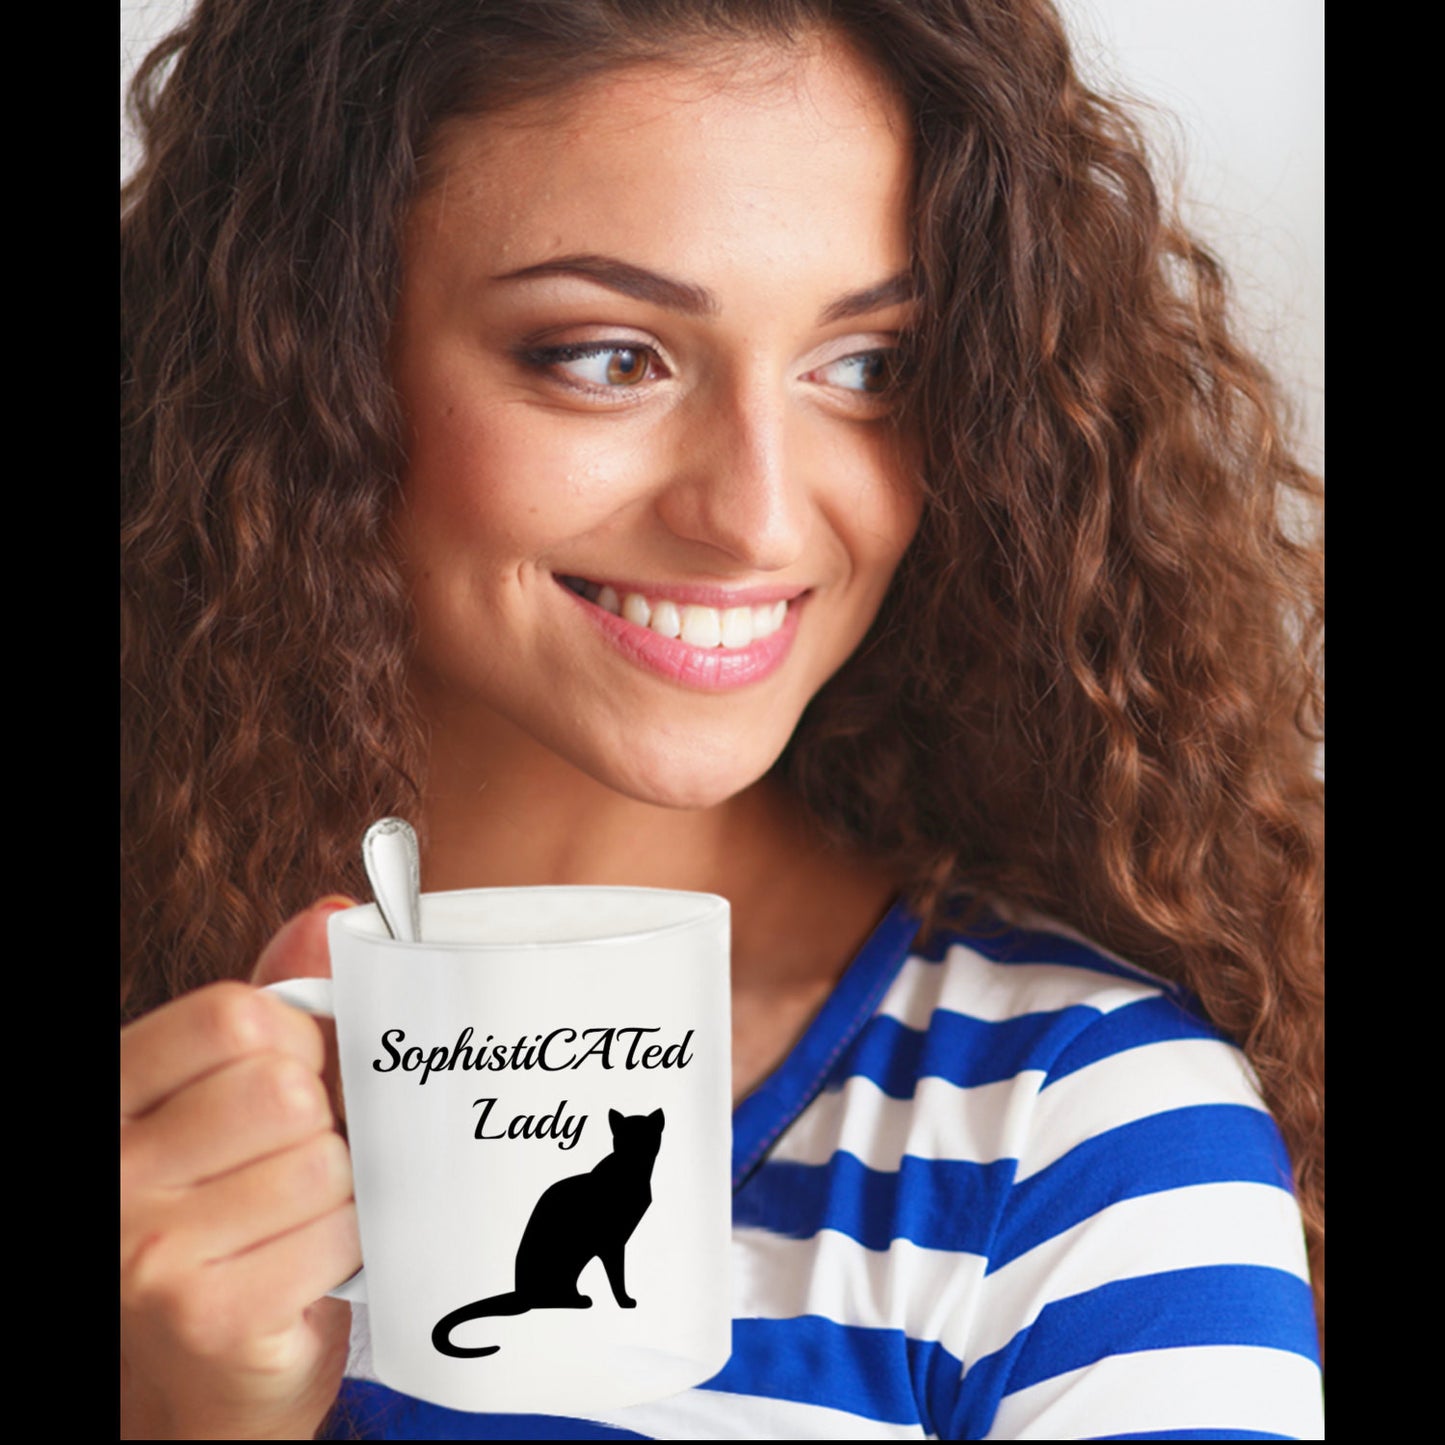 SophistiCated Lady Black Cat Novelty Coffee Mug Cat lover Owner Custom Printed Mug Gift